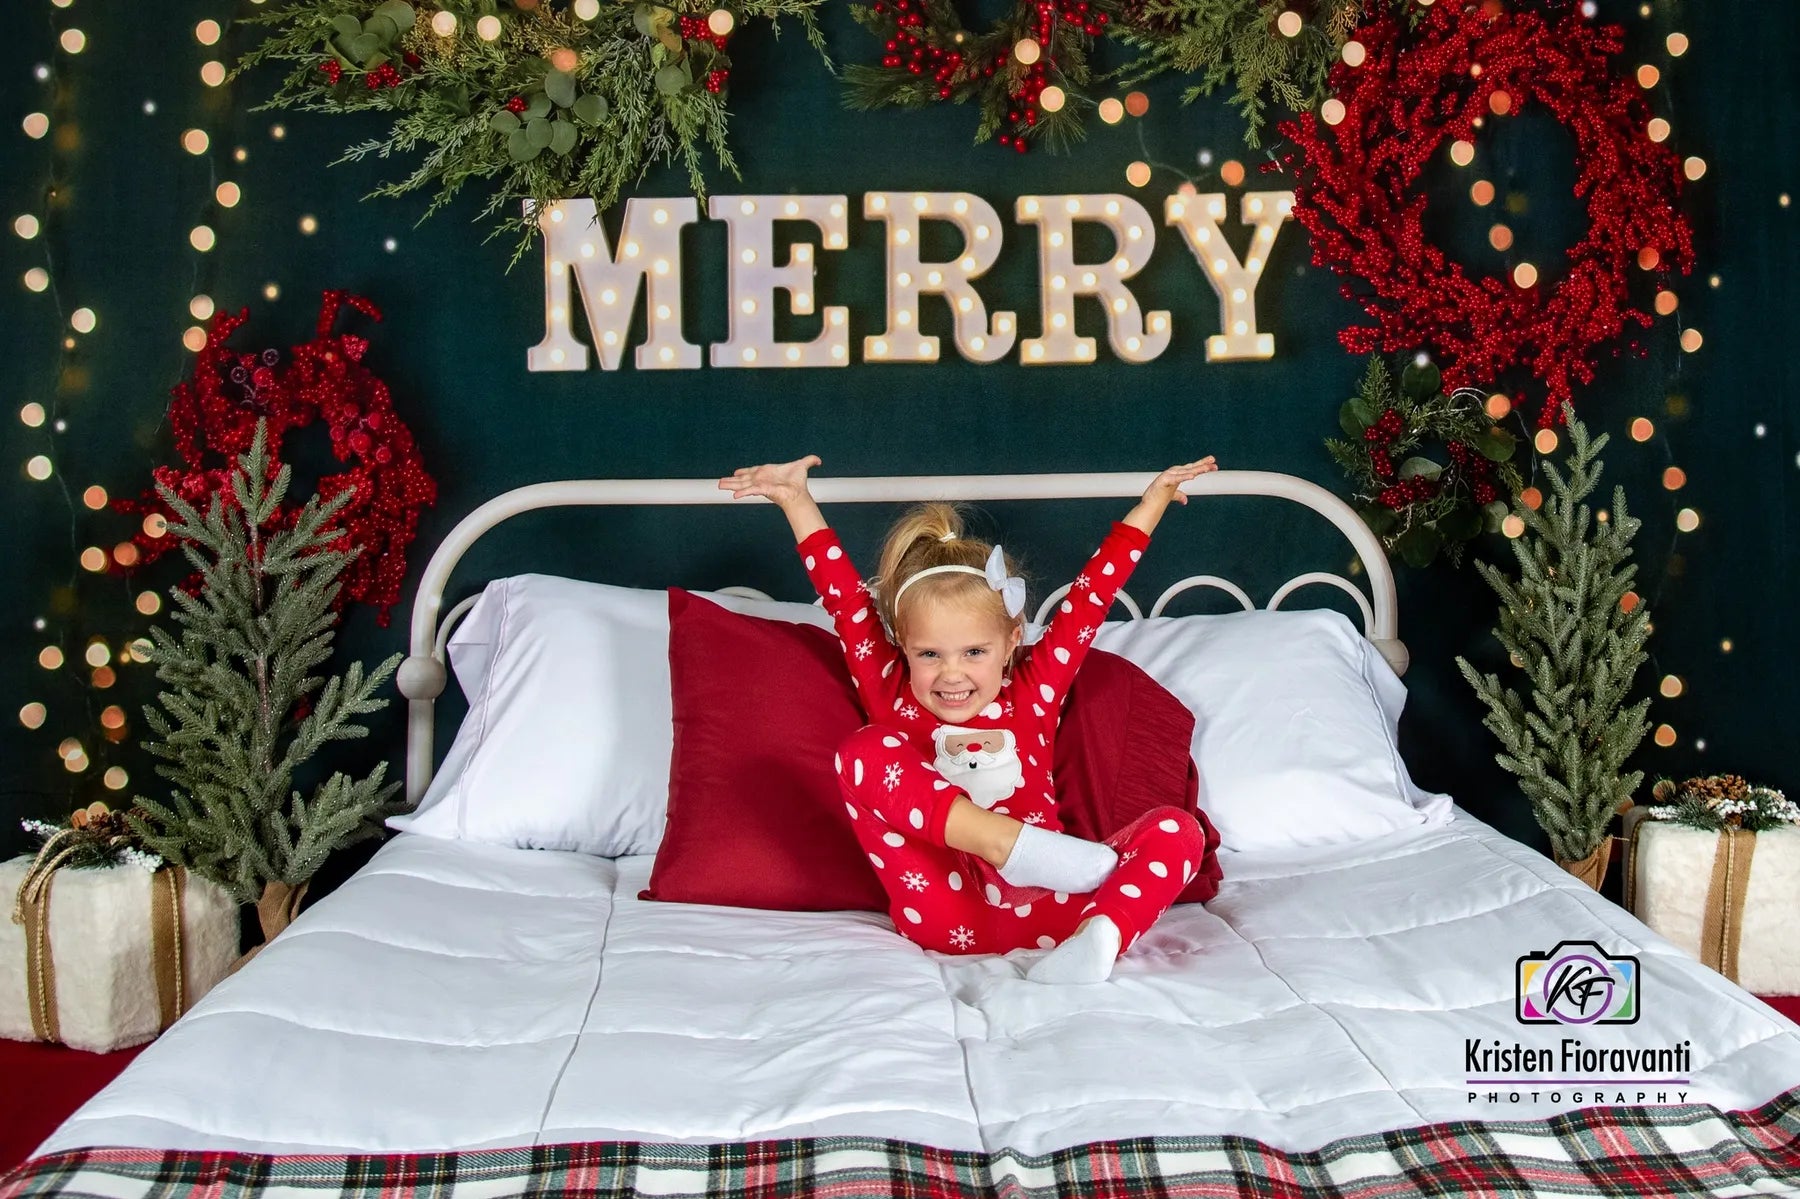 Kate Merry Christmas Fleece Backdrop Sparkle Headboard Designed By Mandy Ringe Photography